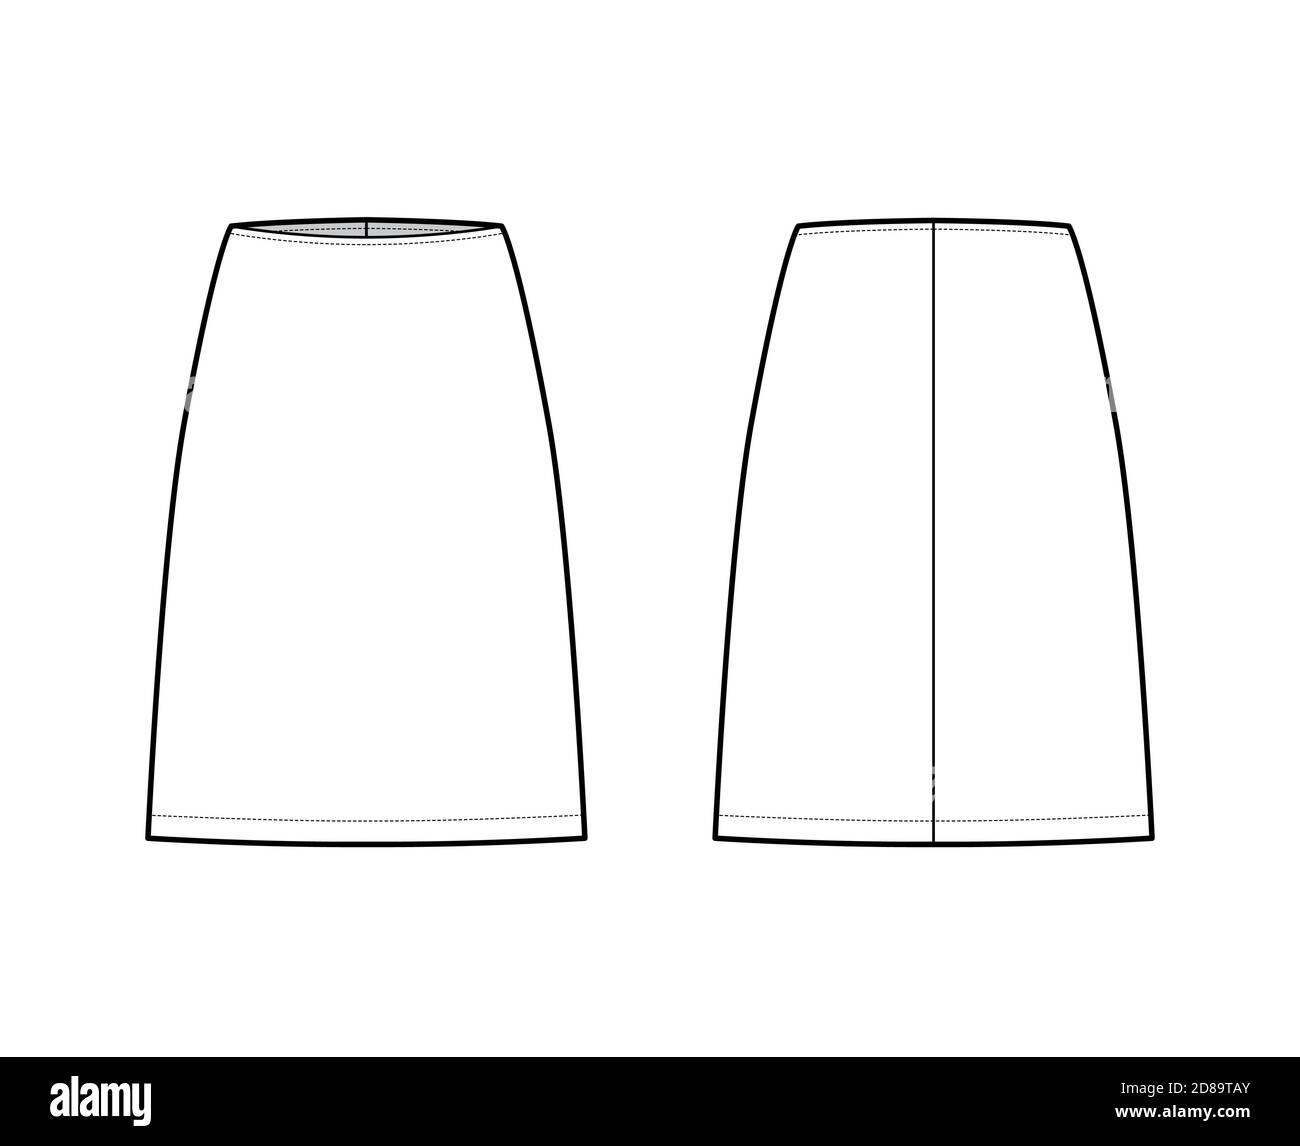 Skirt sheath technical fashion illustration with straight knee ...